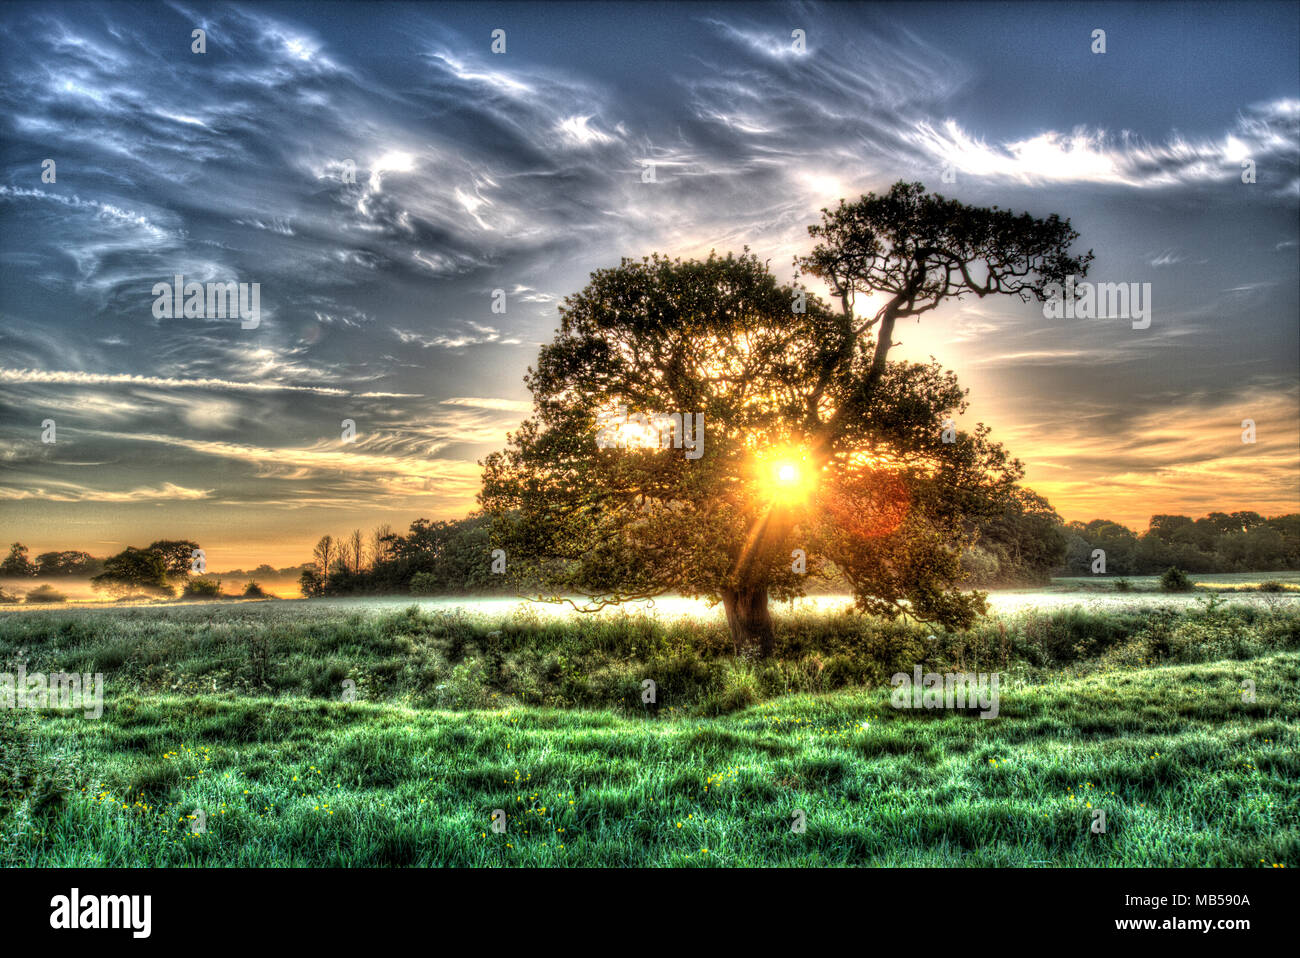 Village of Coddington, England. Artistic sunrise over a pasture farming field and oak tree in rural Cheshire. Stock Photo